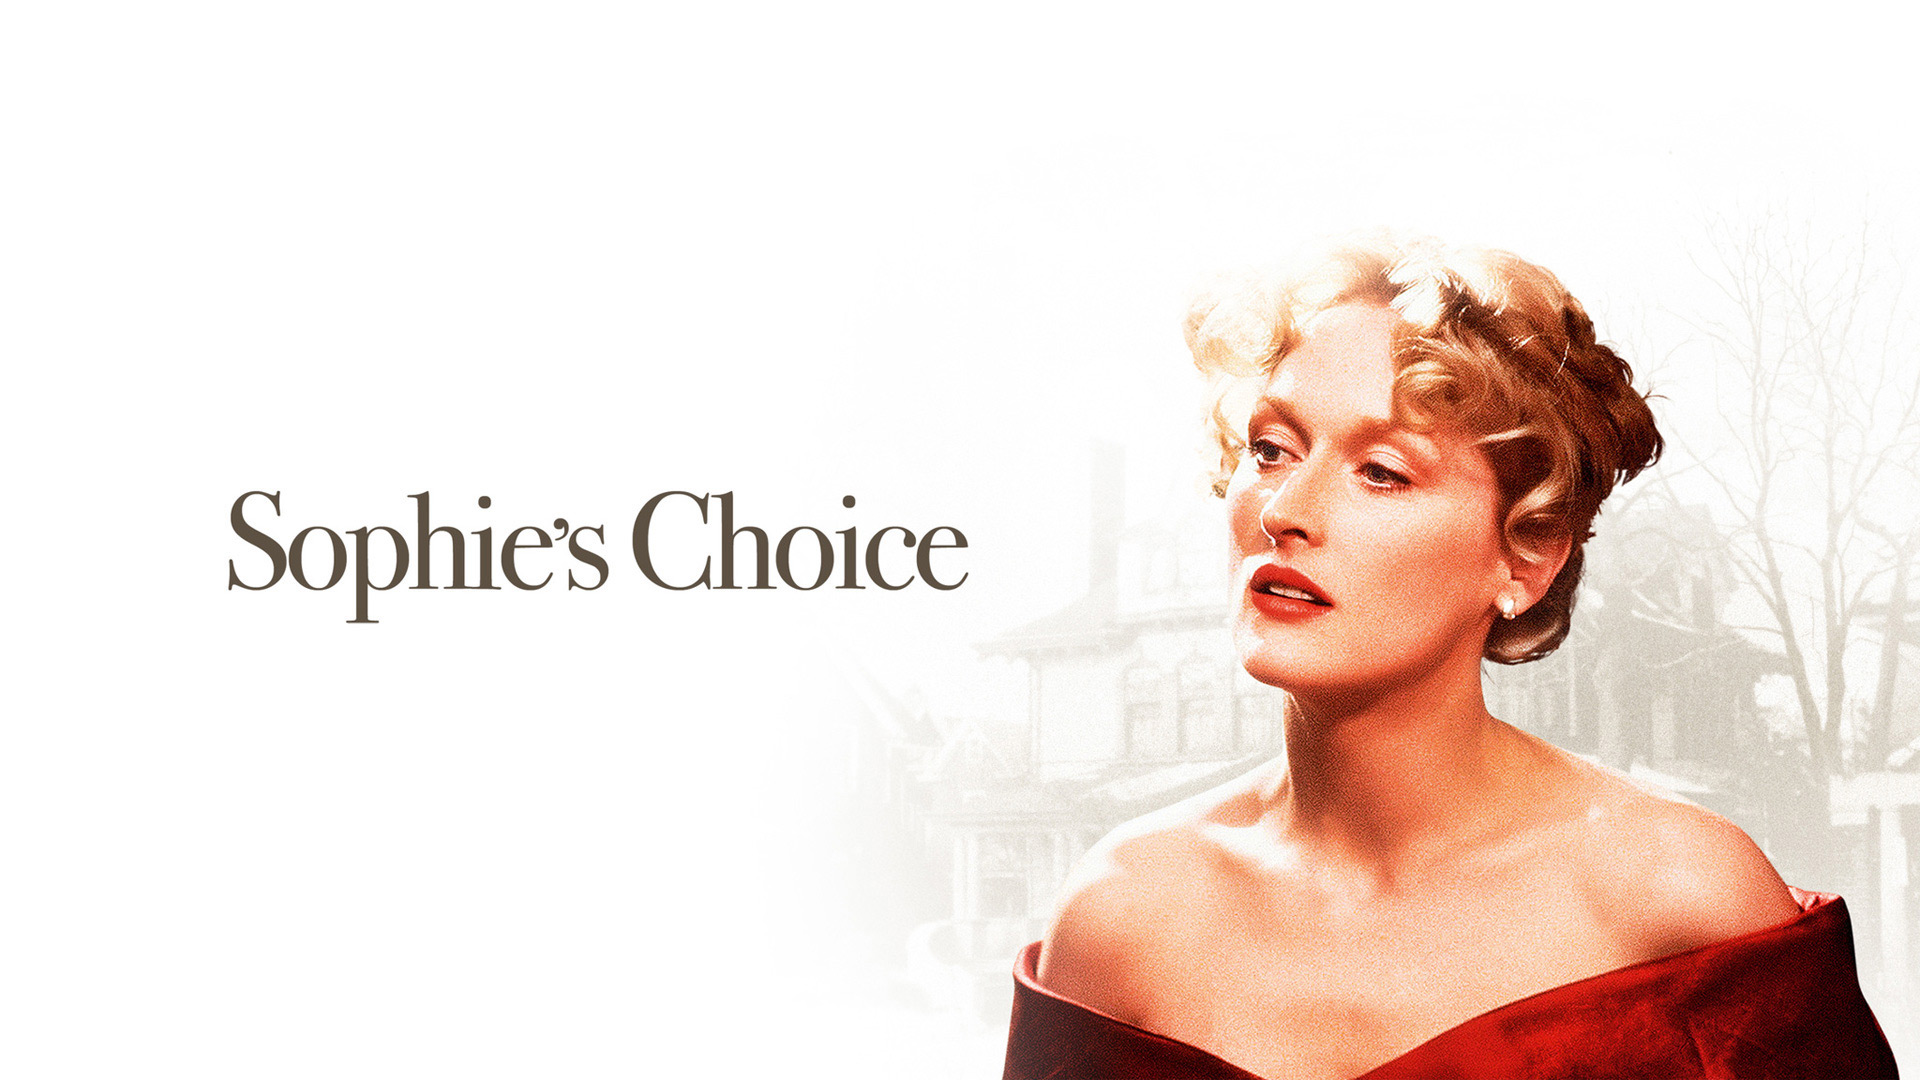 Sophie's Choice hüngür hüngür ağlatan filmler